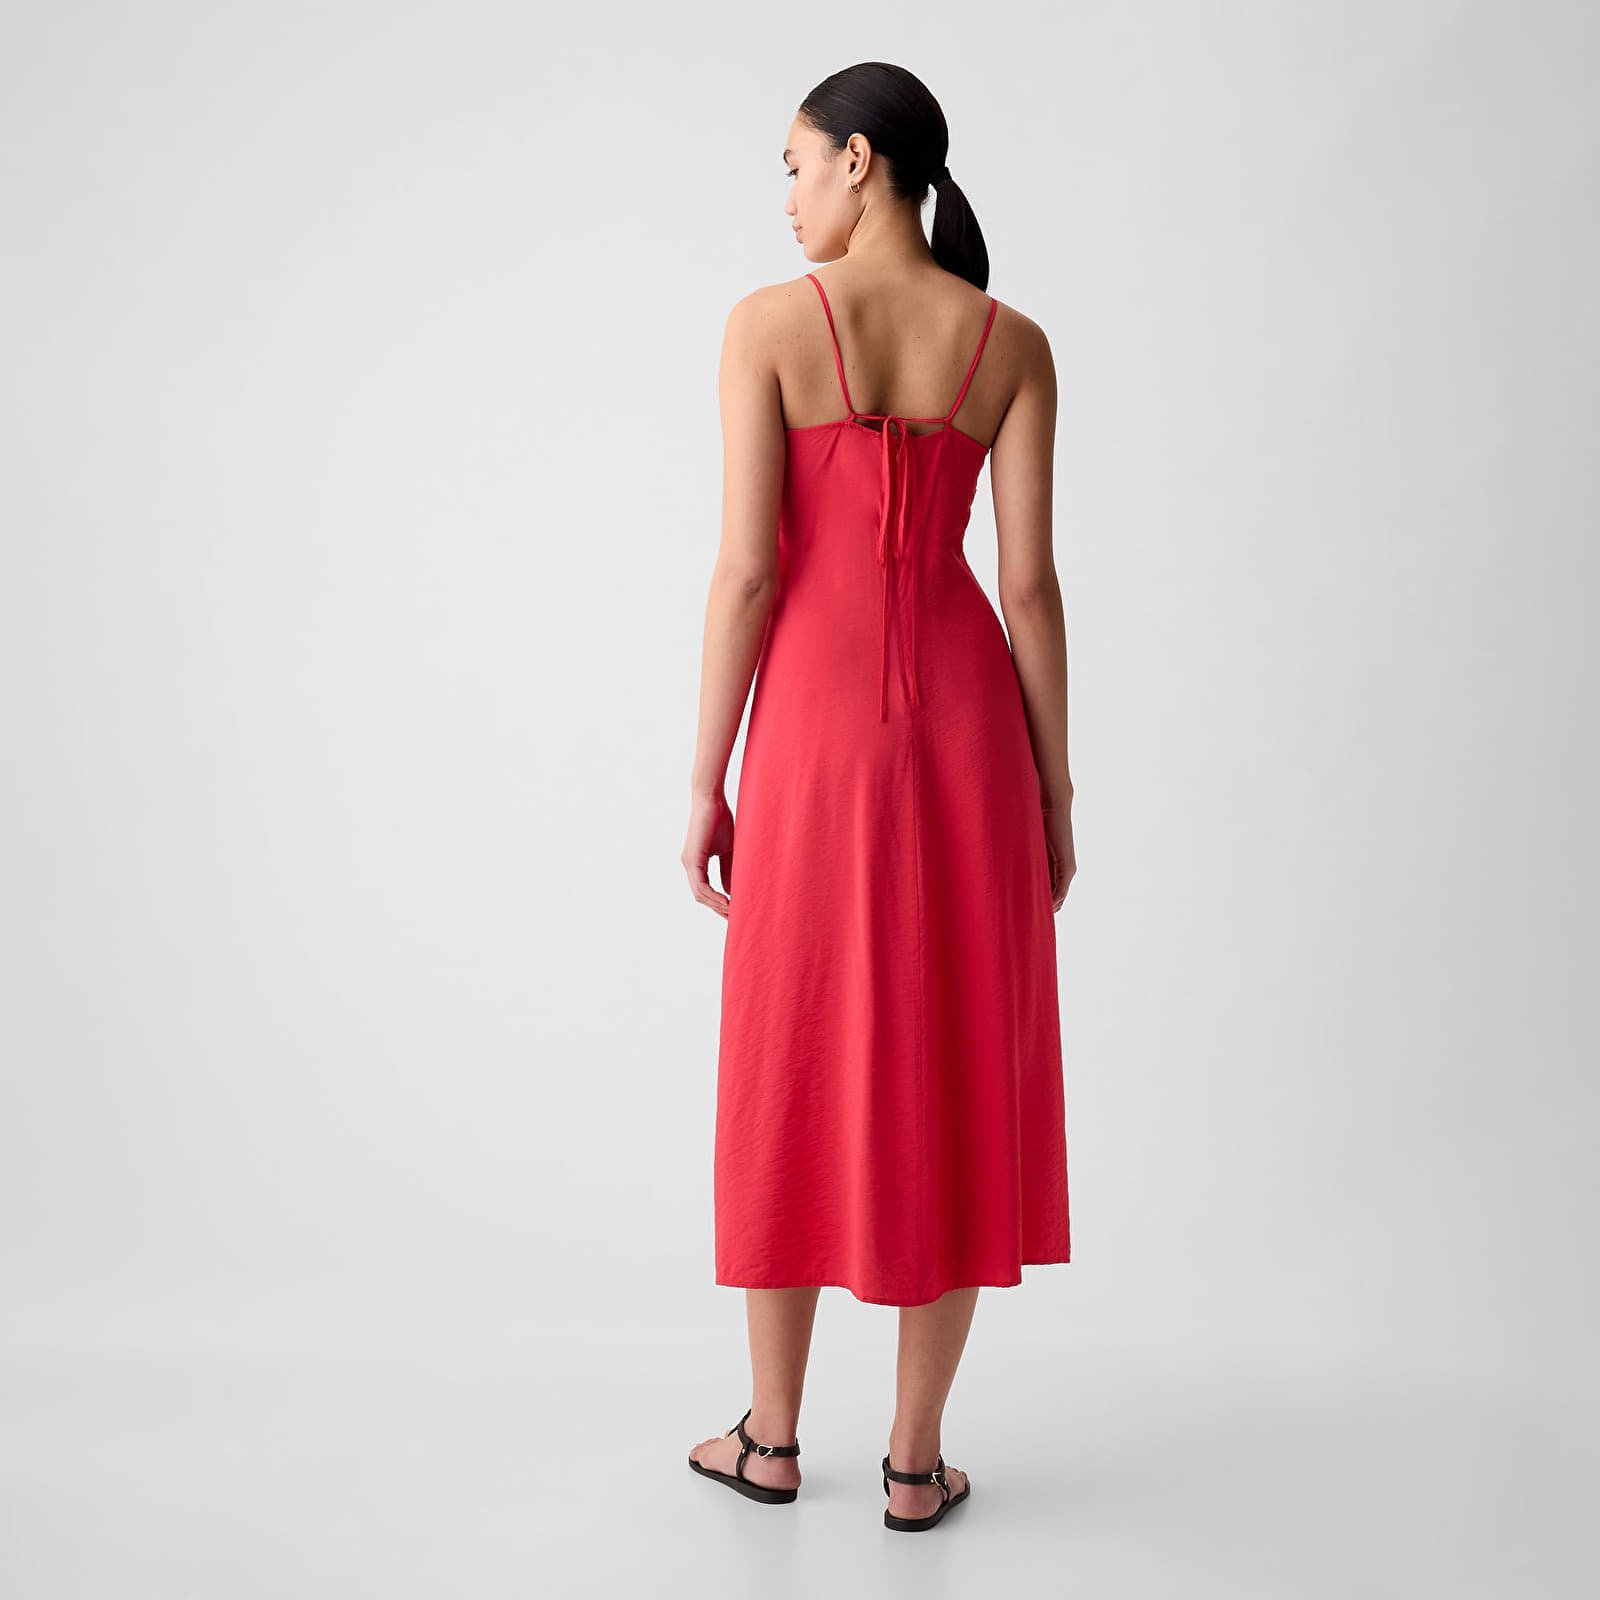 Dresses Strappy Back Maxi Slip Dress Slipper Red